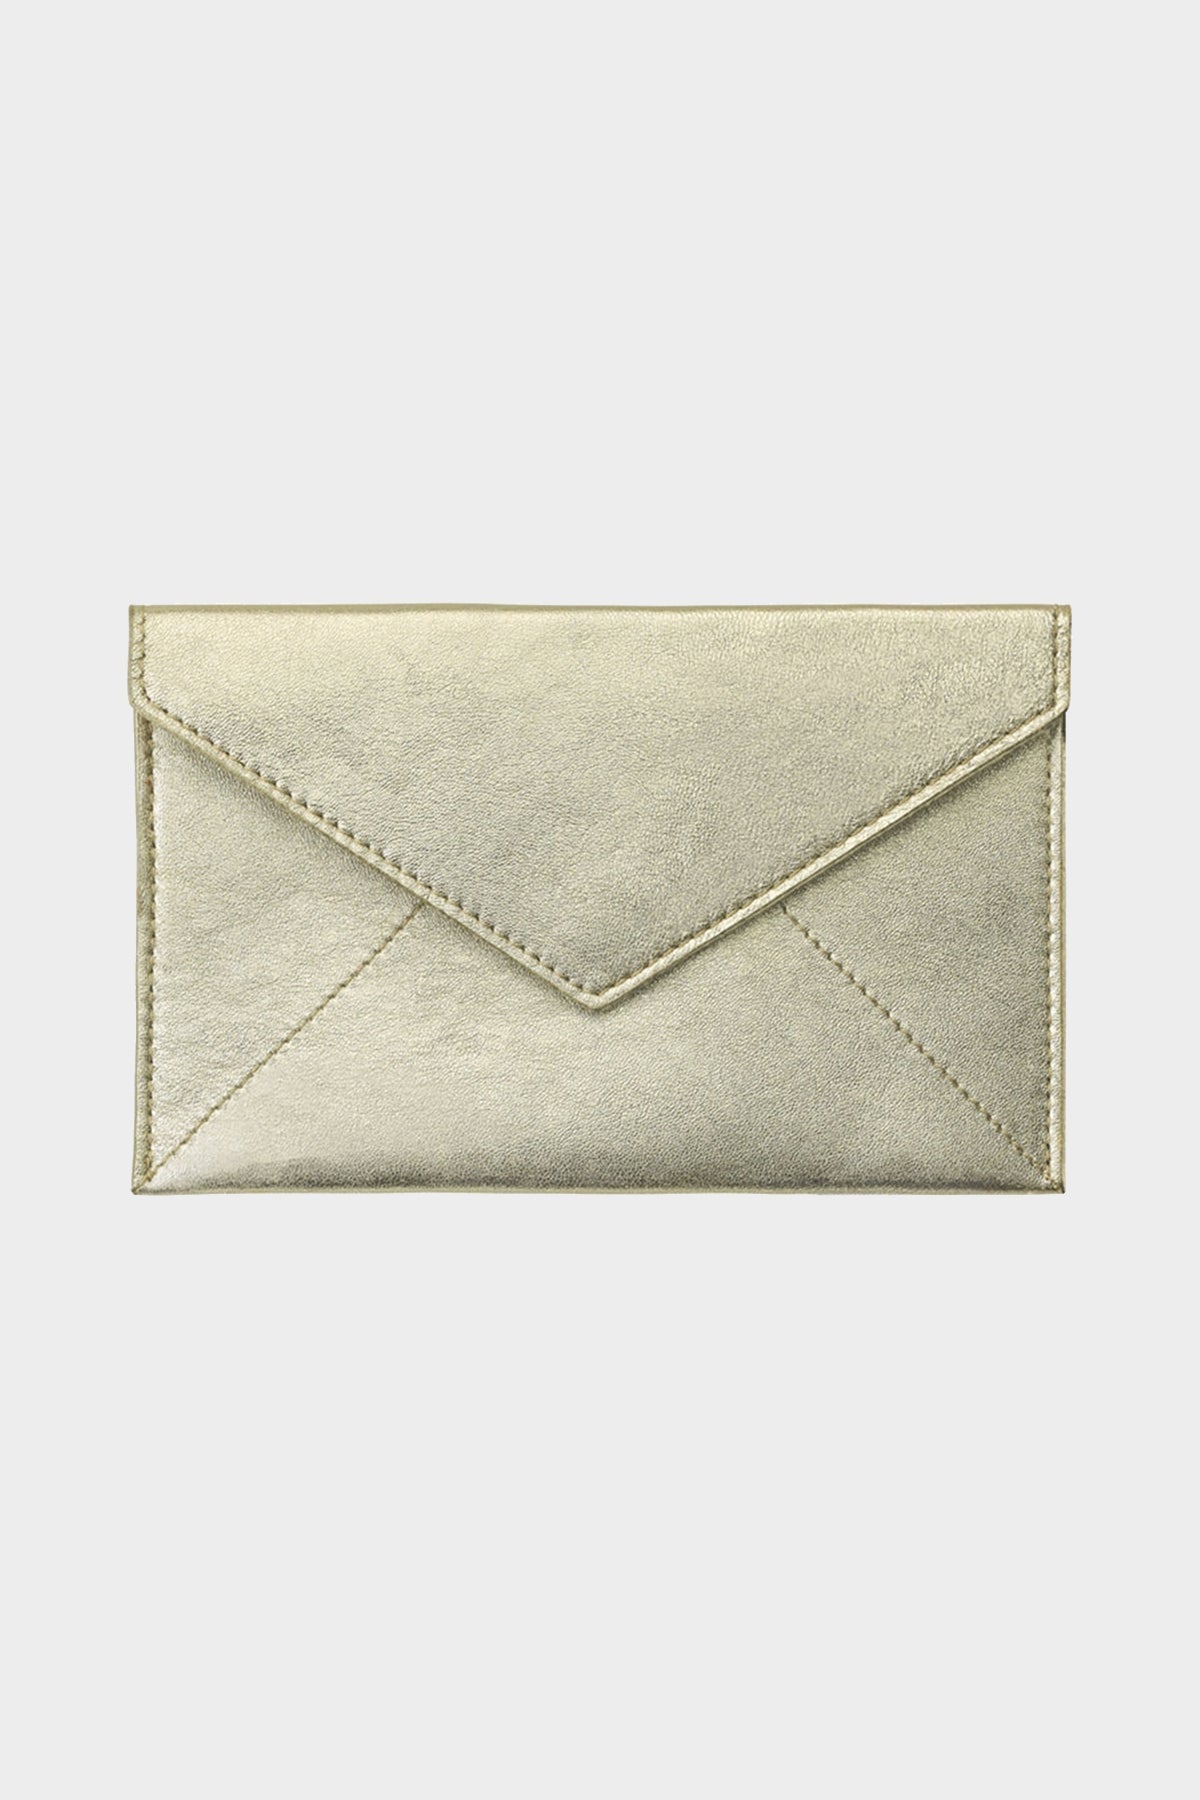 White Gold Metallic Goatskin Medium Envelope - shop-olivia.com